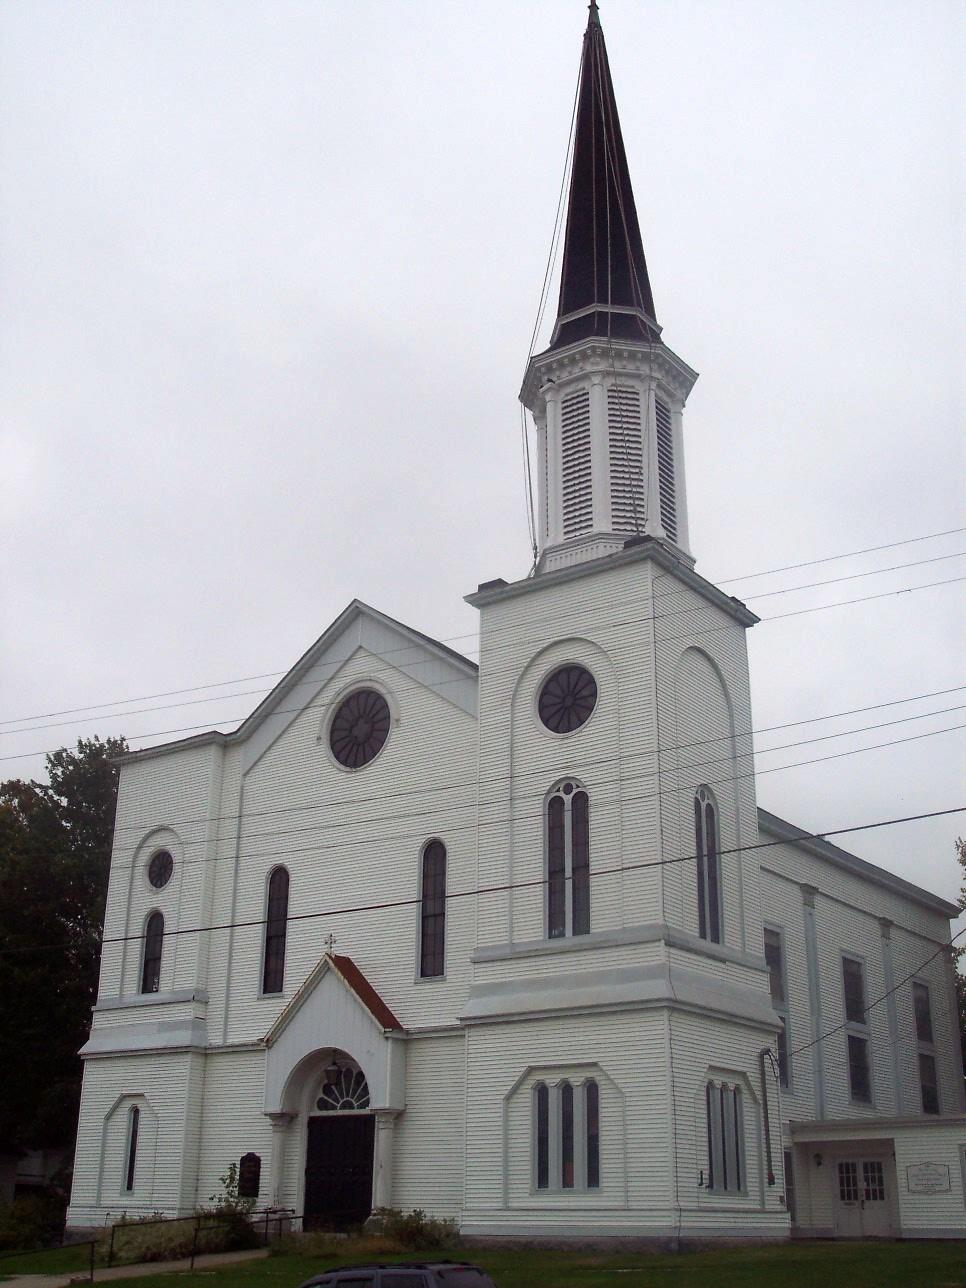 Second Congregational Church of Biddeford